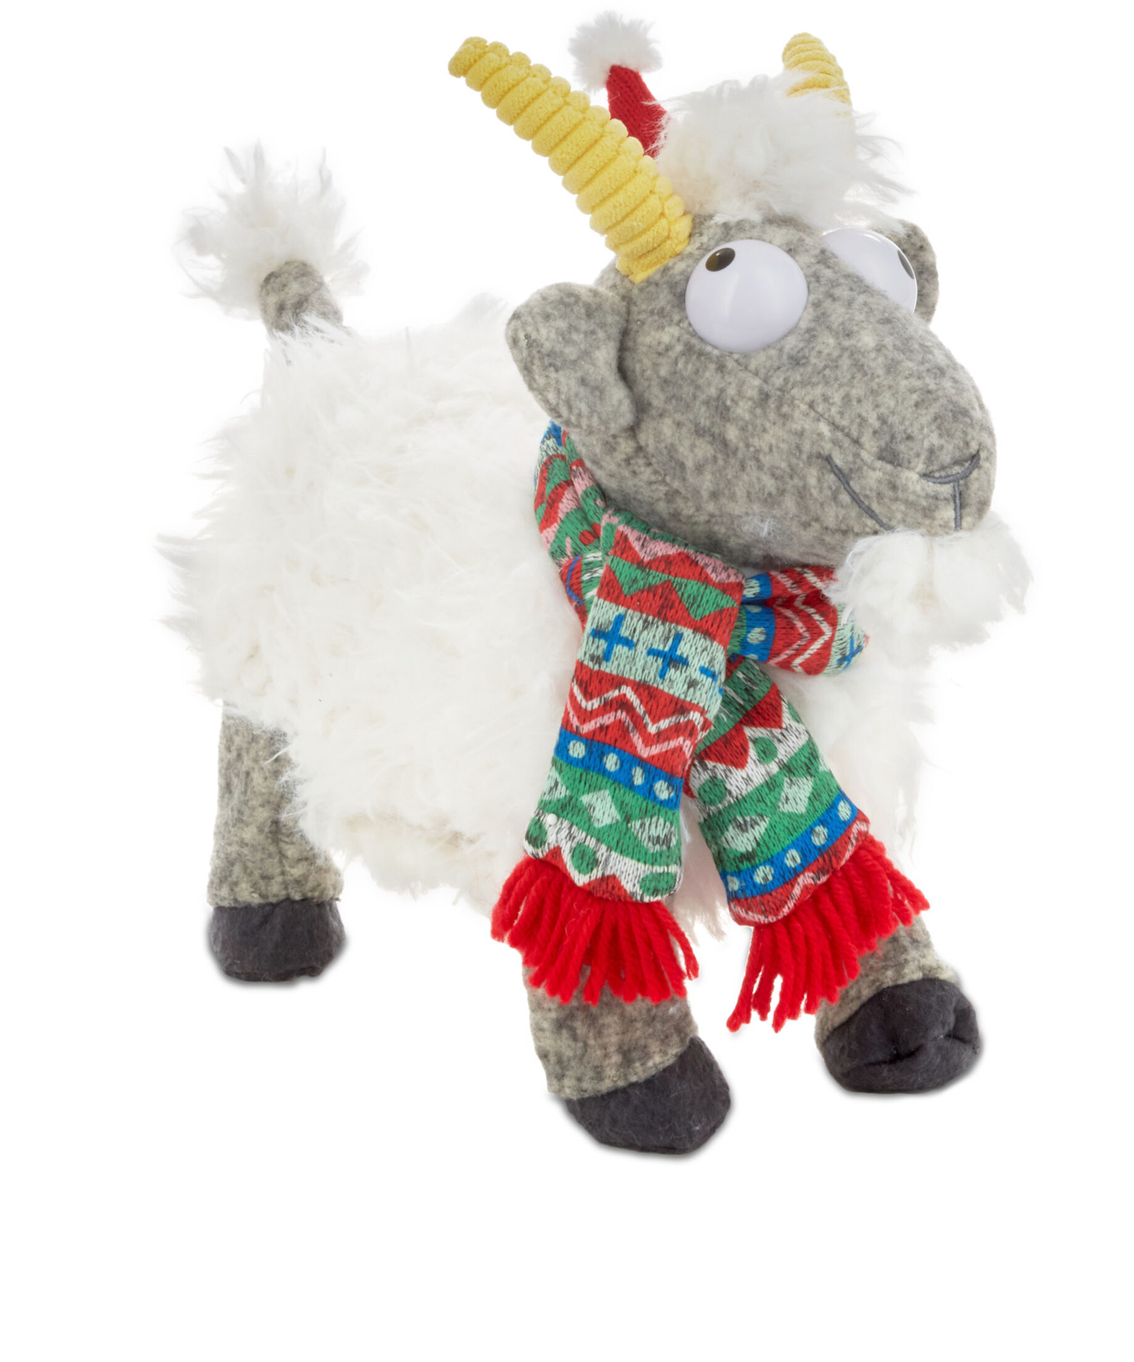 Hallmark Tis The Screamin' Goat Singing Christmas Plush New with Tag